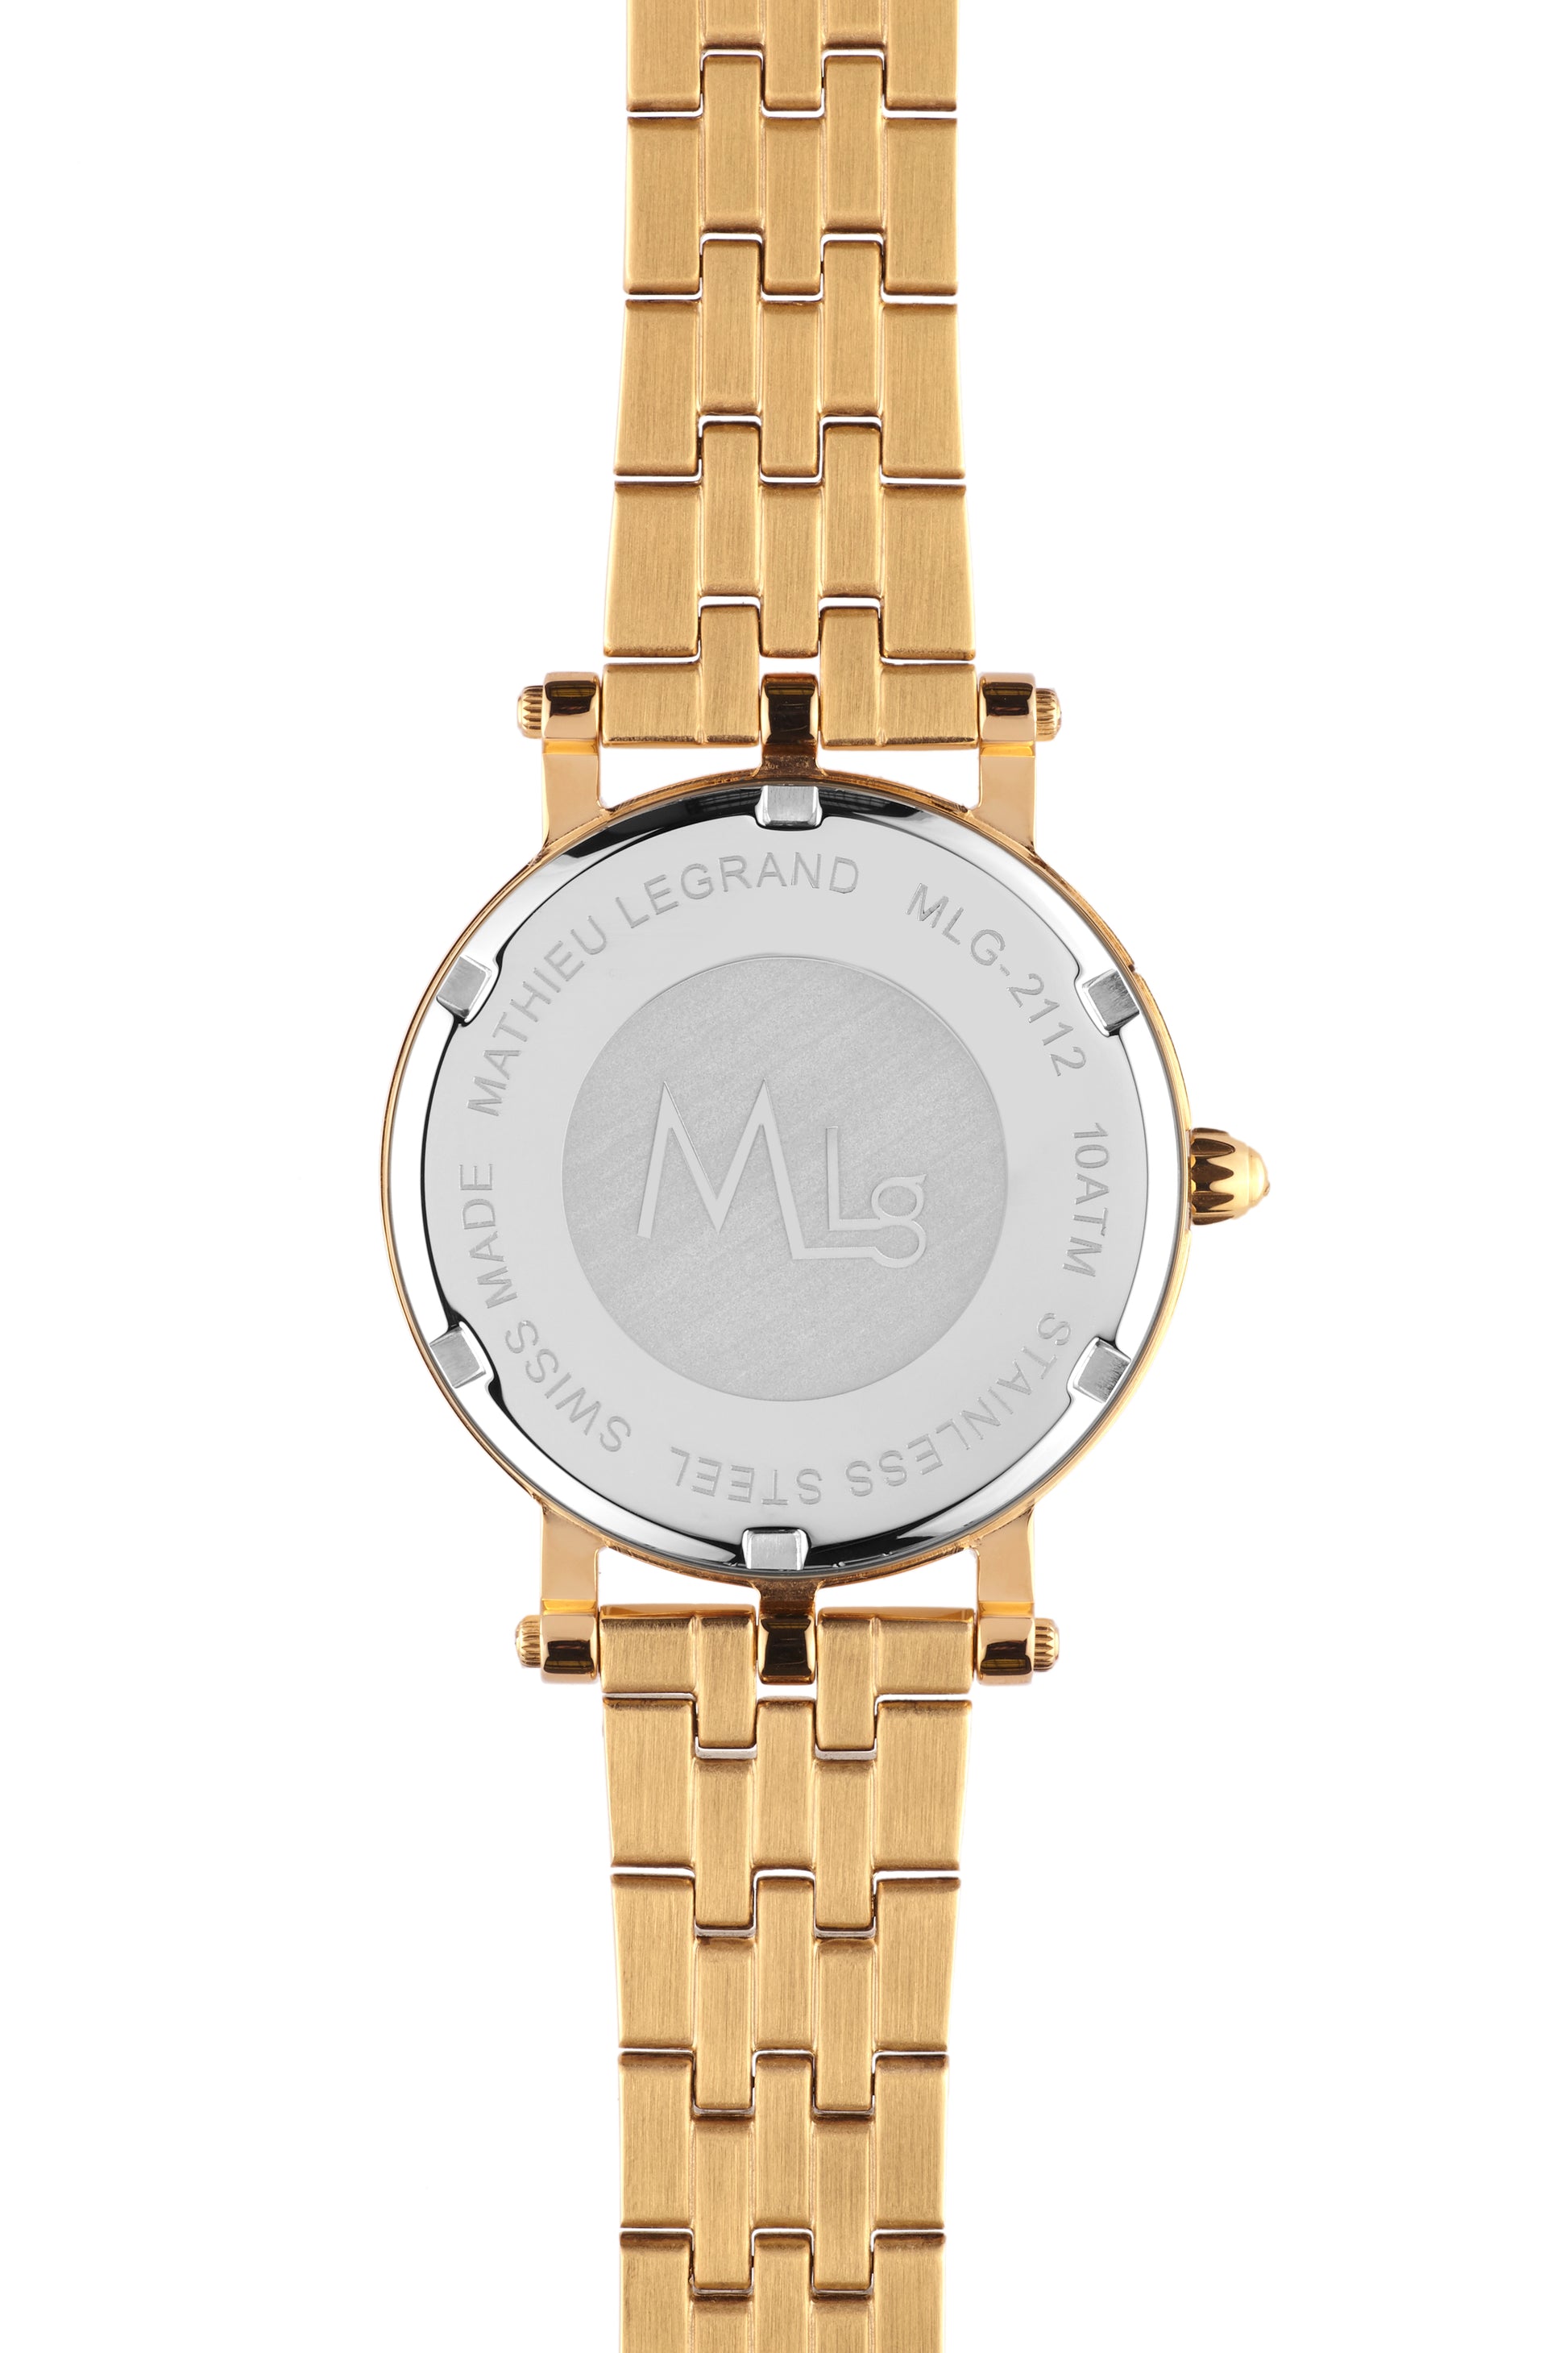 Automatic watches — Petiller — Mathieu Legrand — gold silver